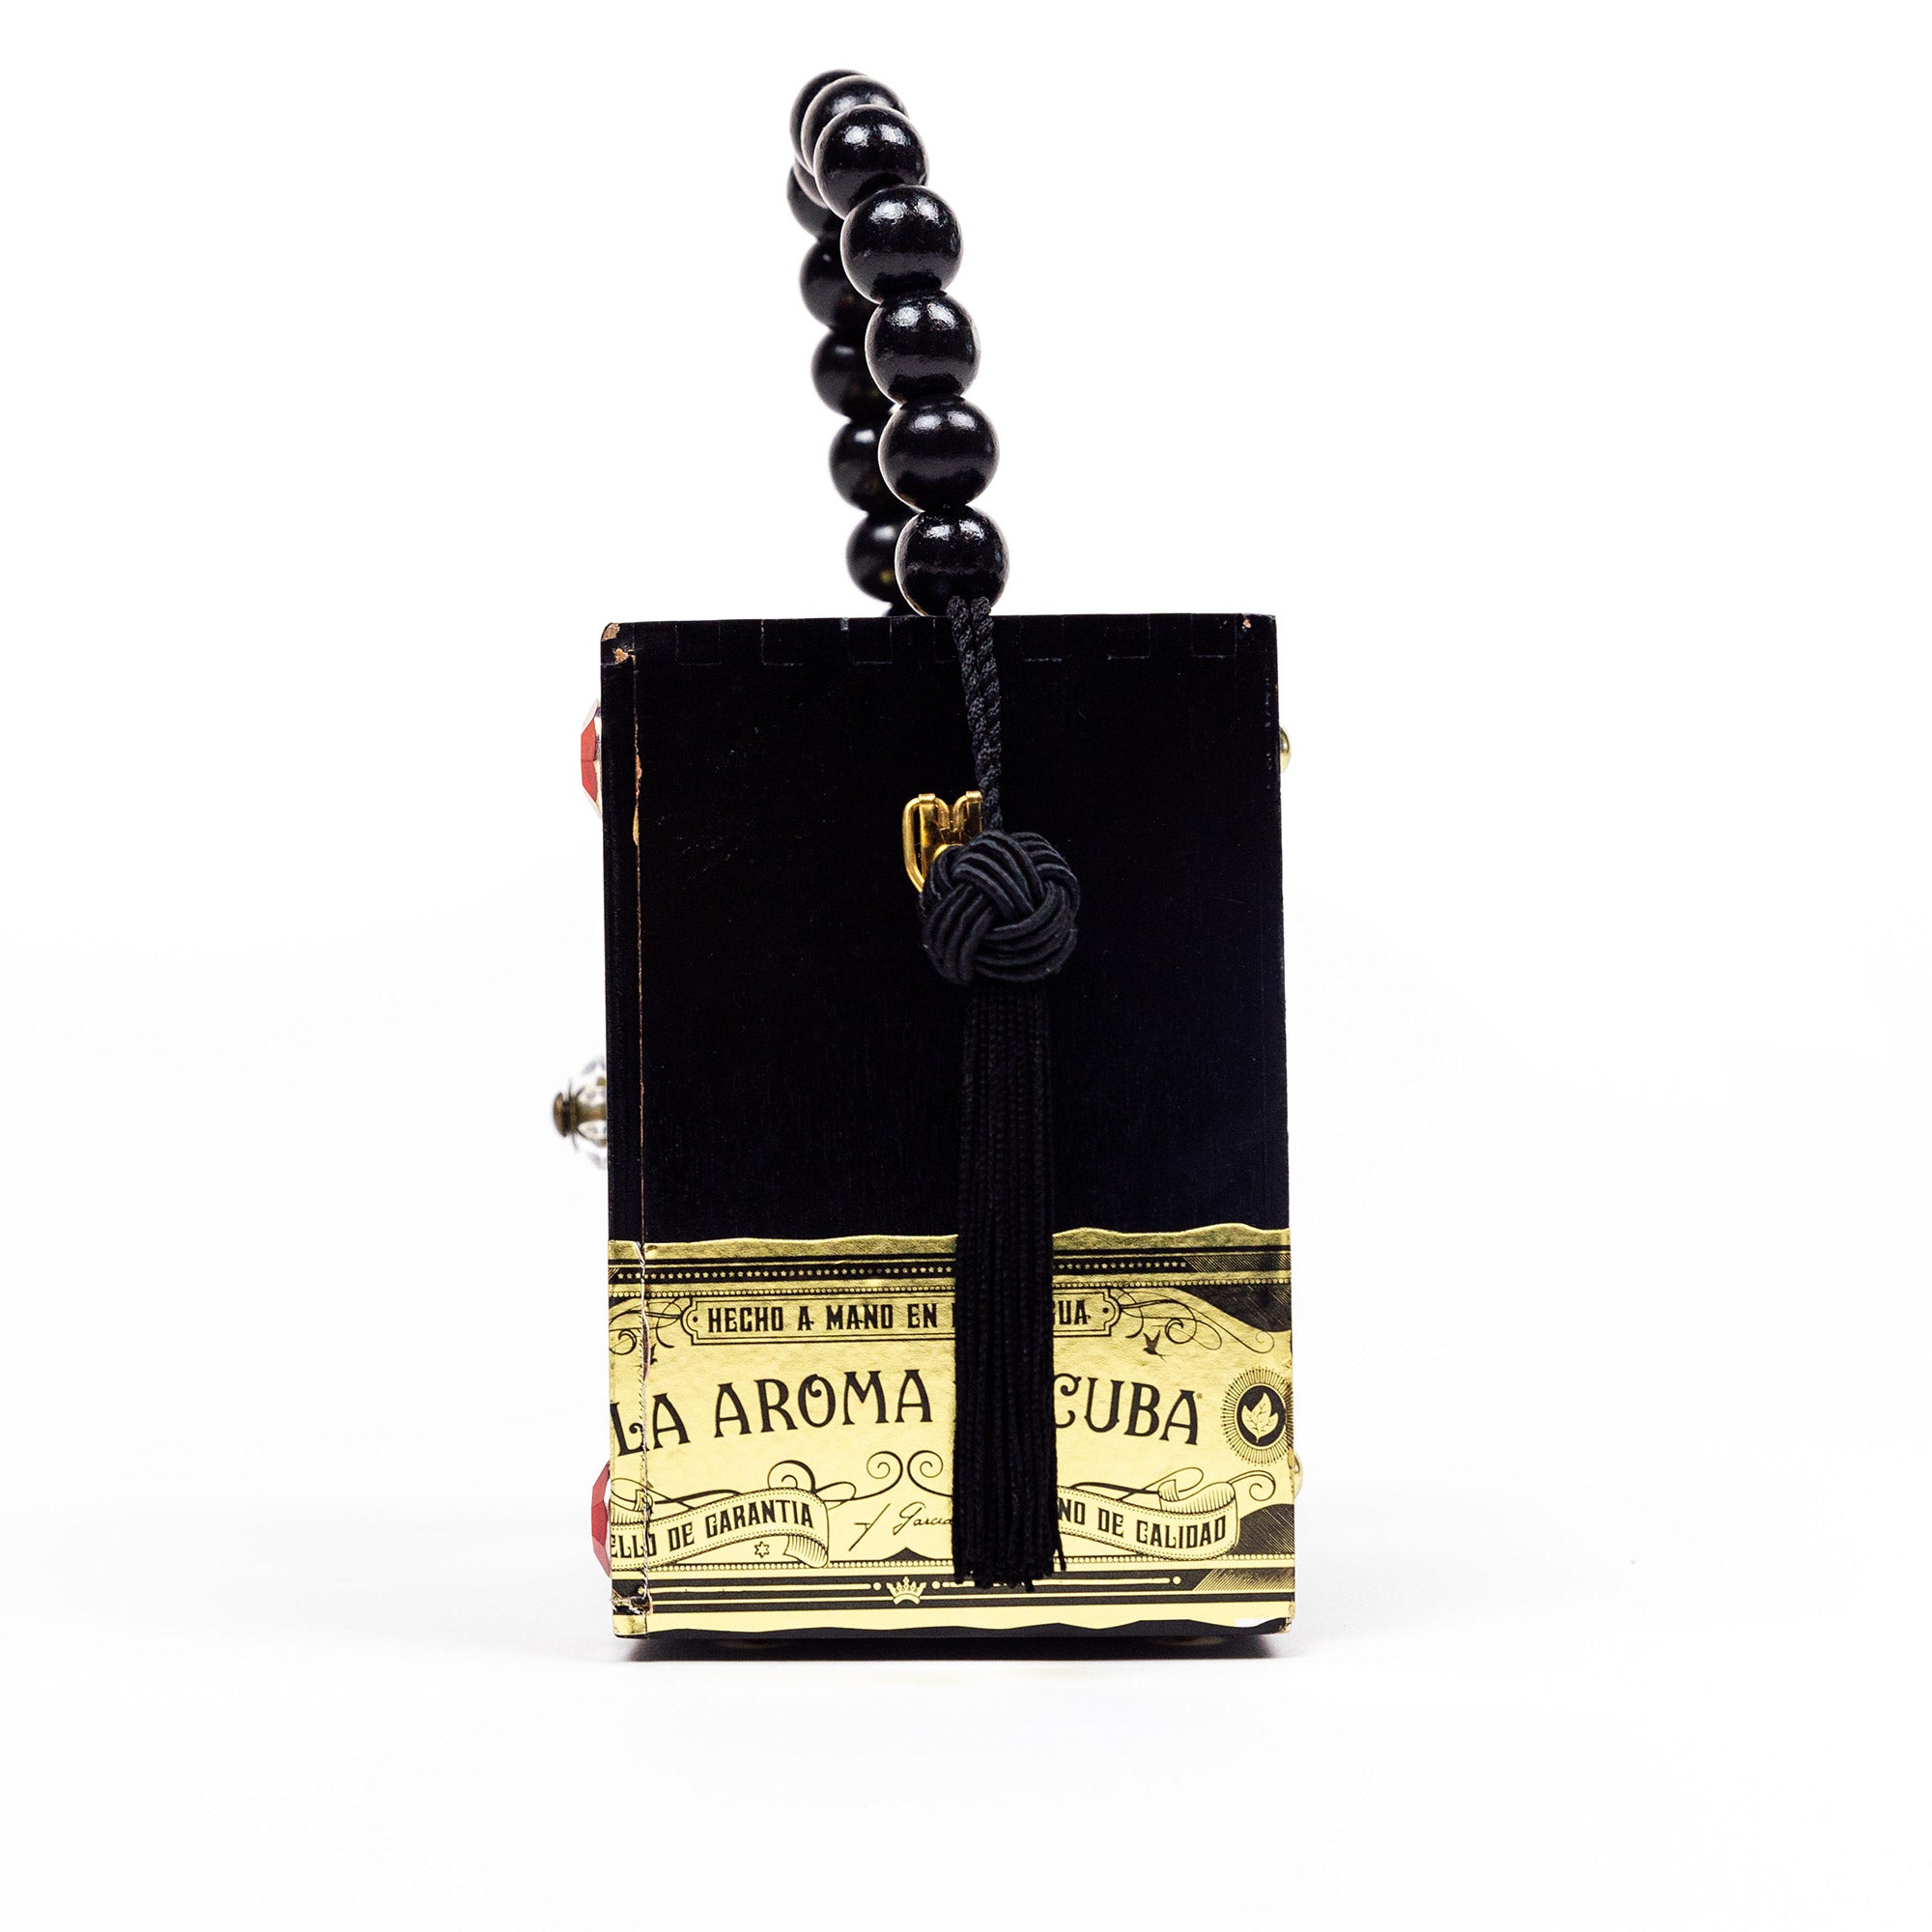 Tampa Cigar Box Purse (black)